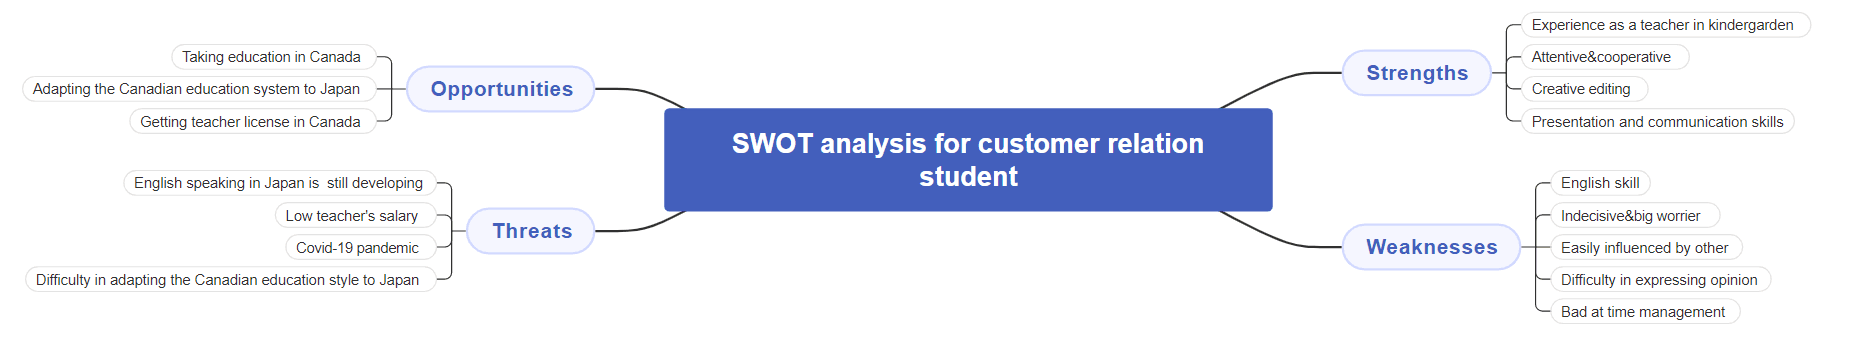 SWOT analysis for customer relation student